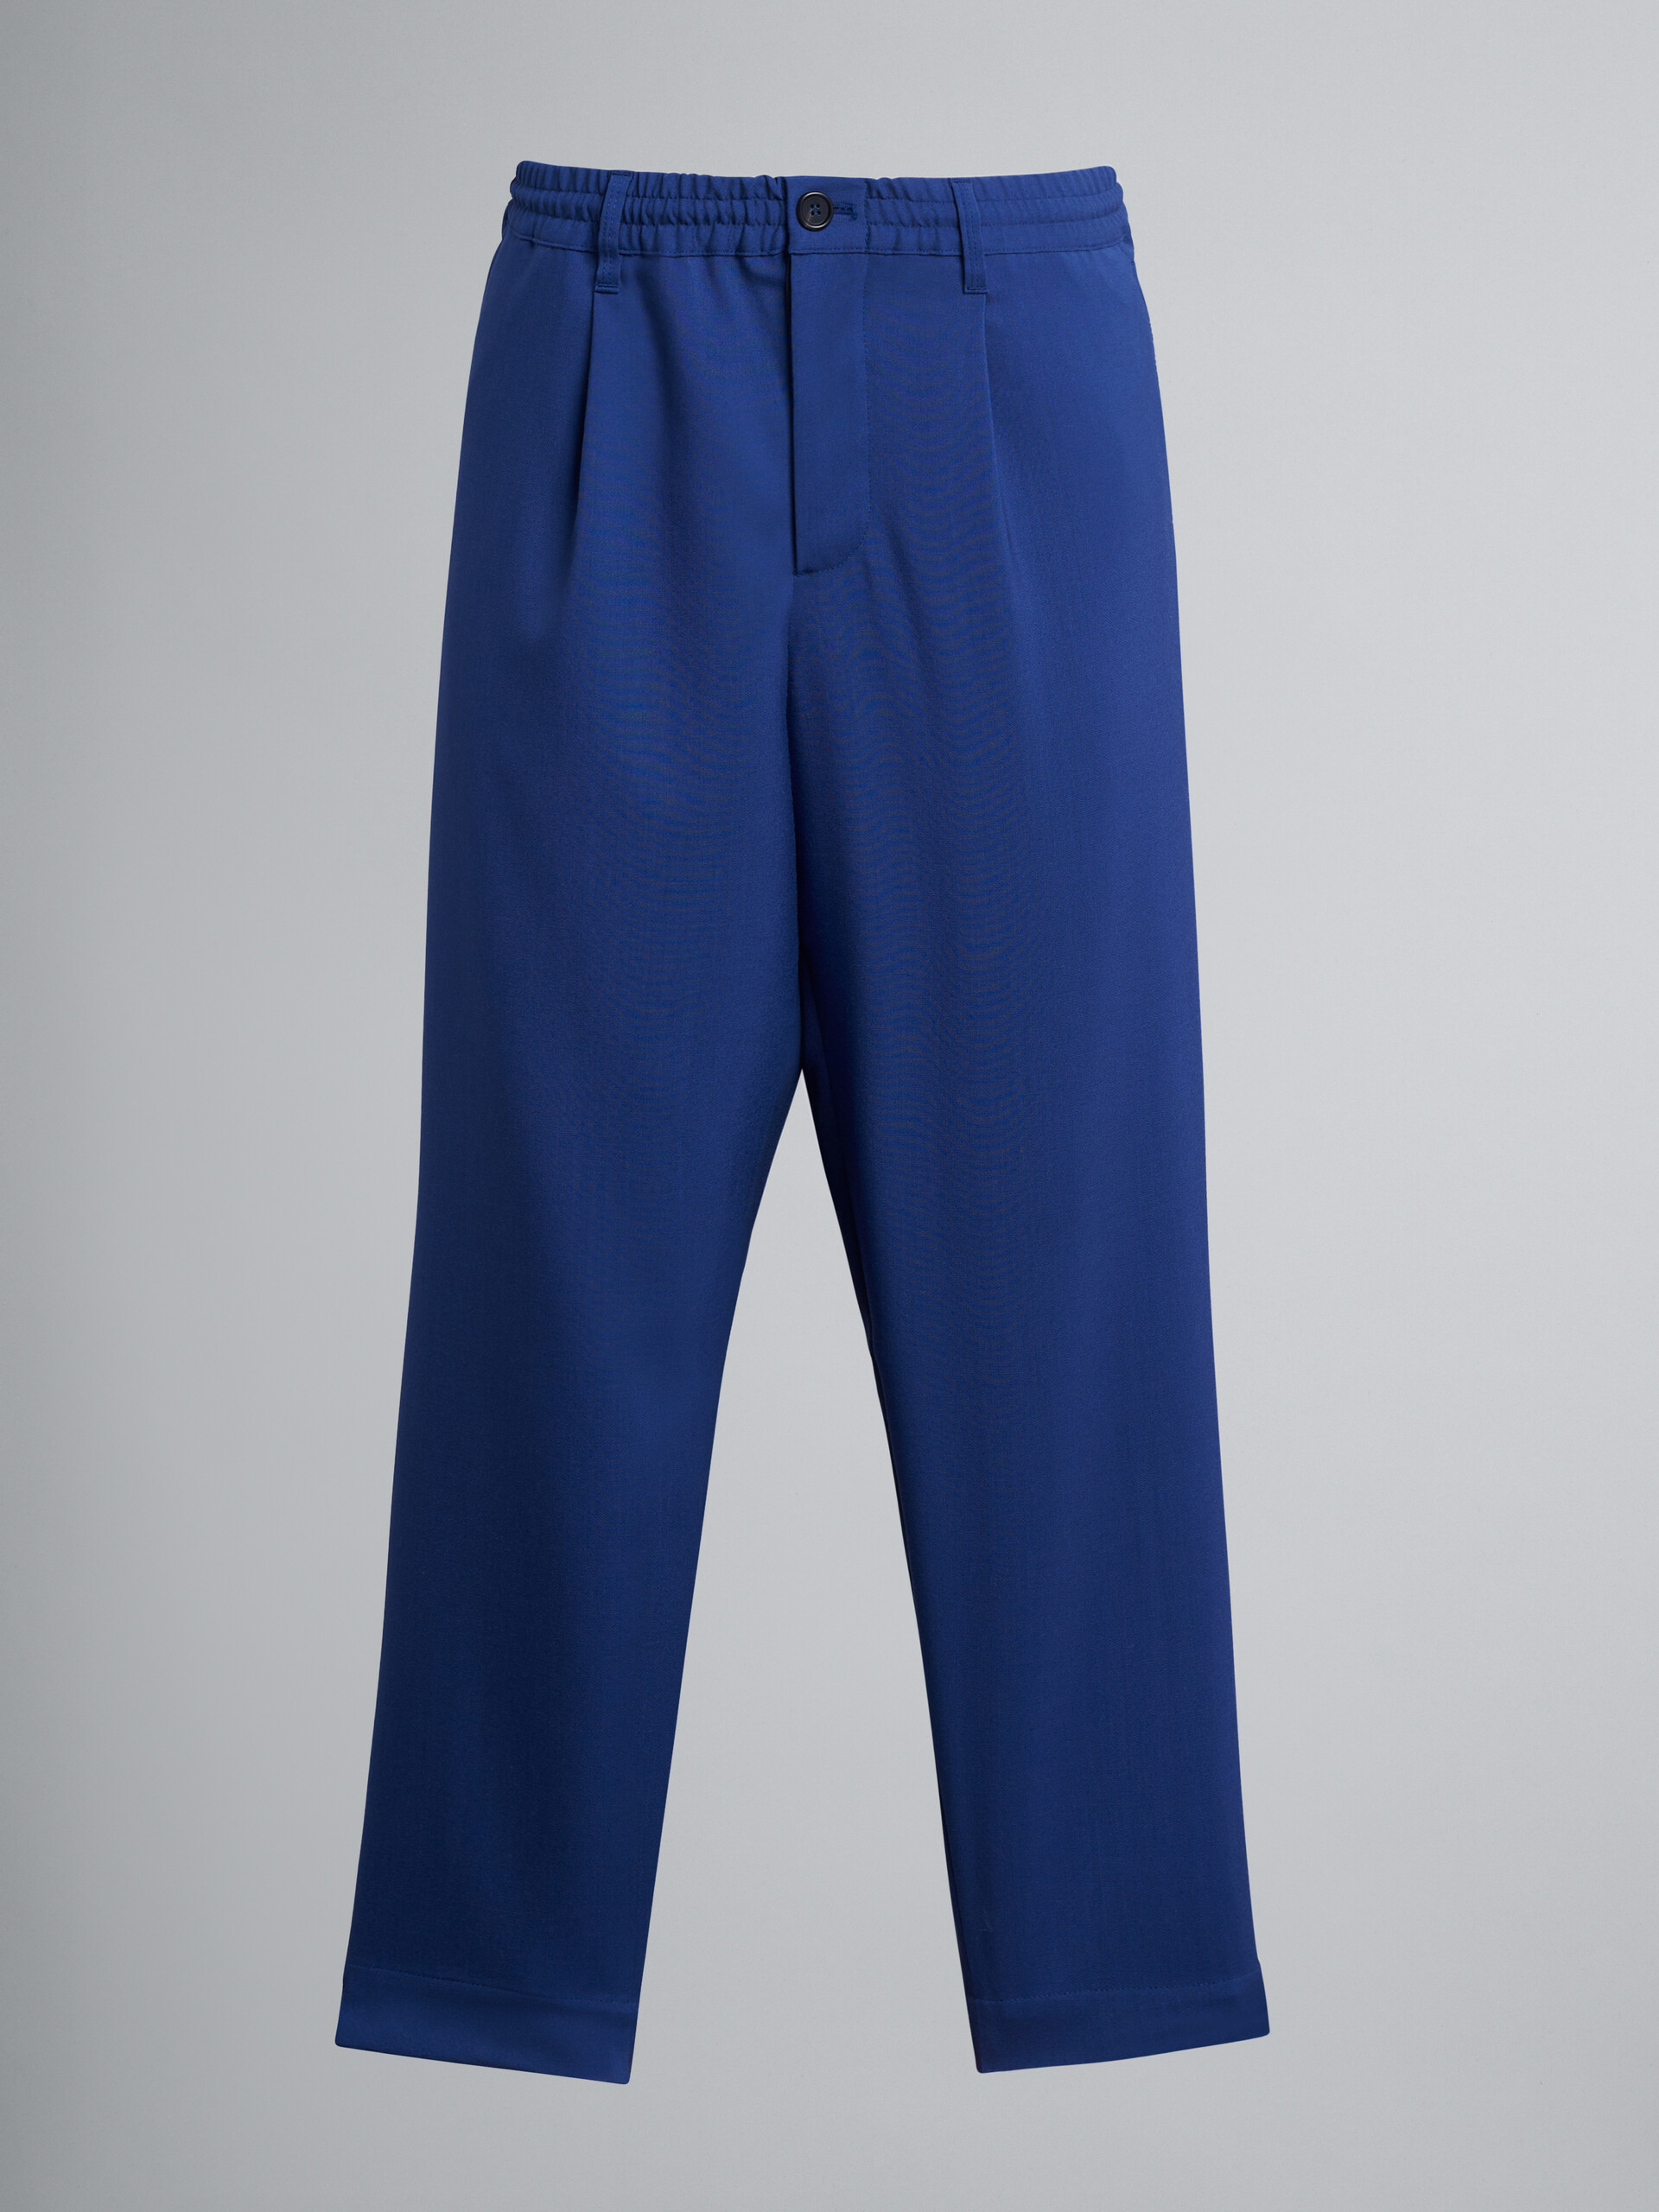 Pantaloni in fresco di lana a blocchi di colore blu - Pantaloni - Image 1